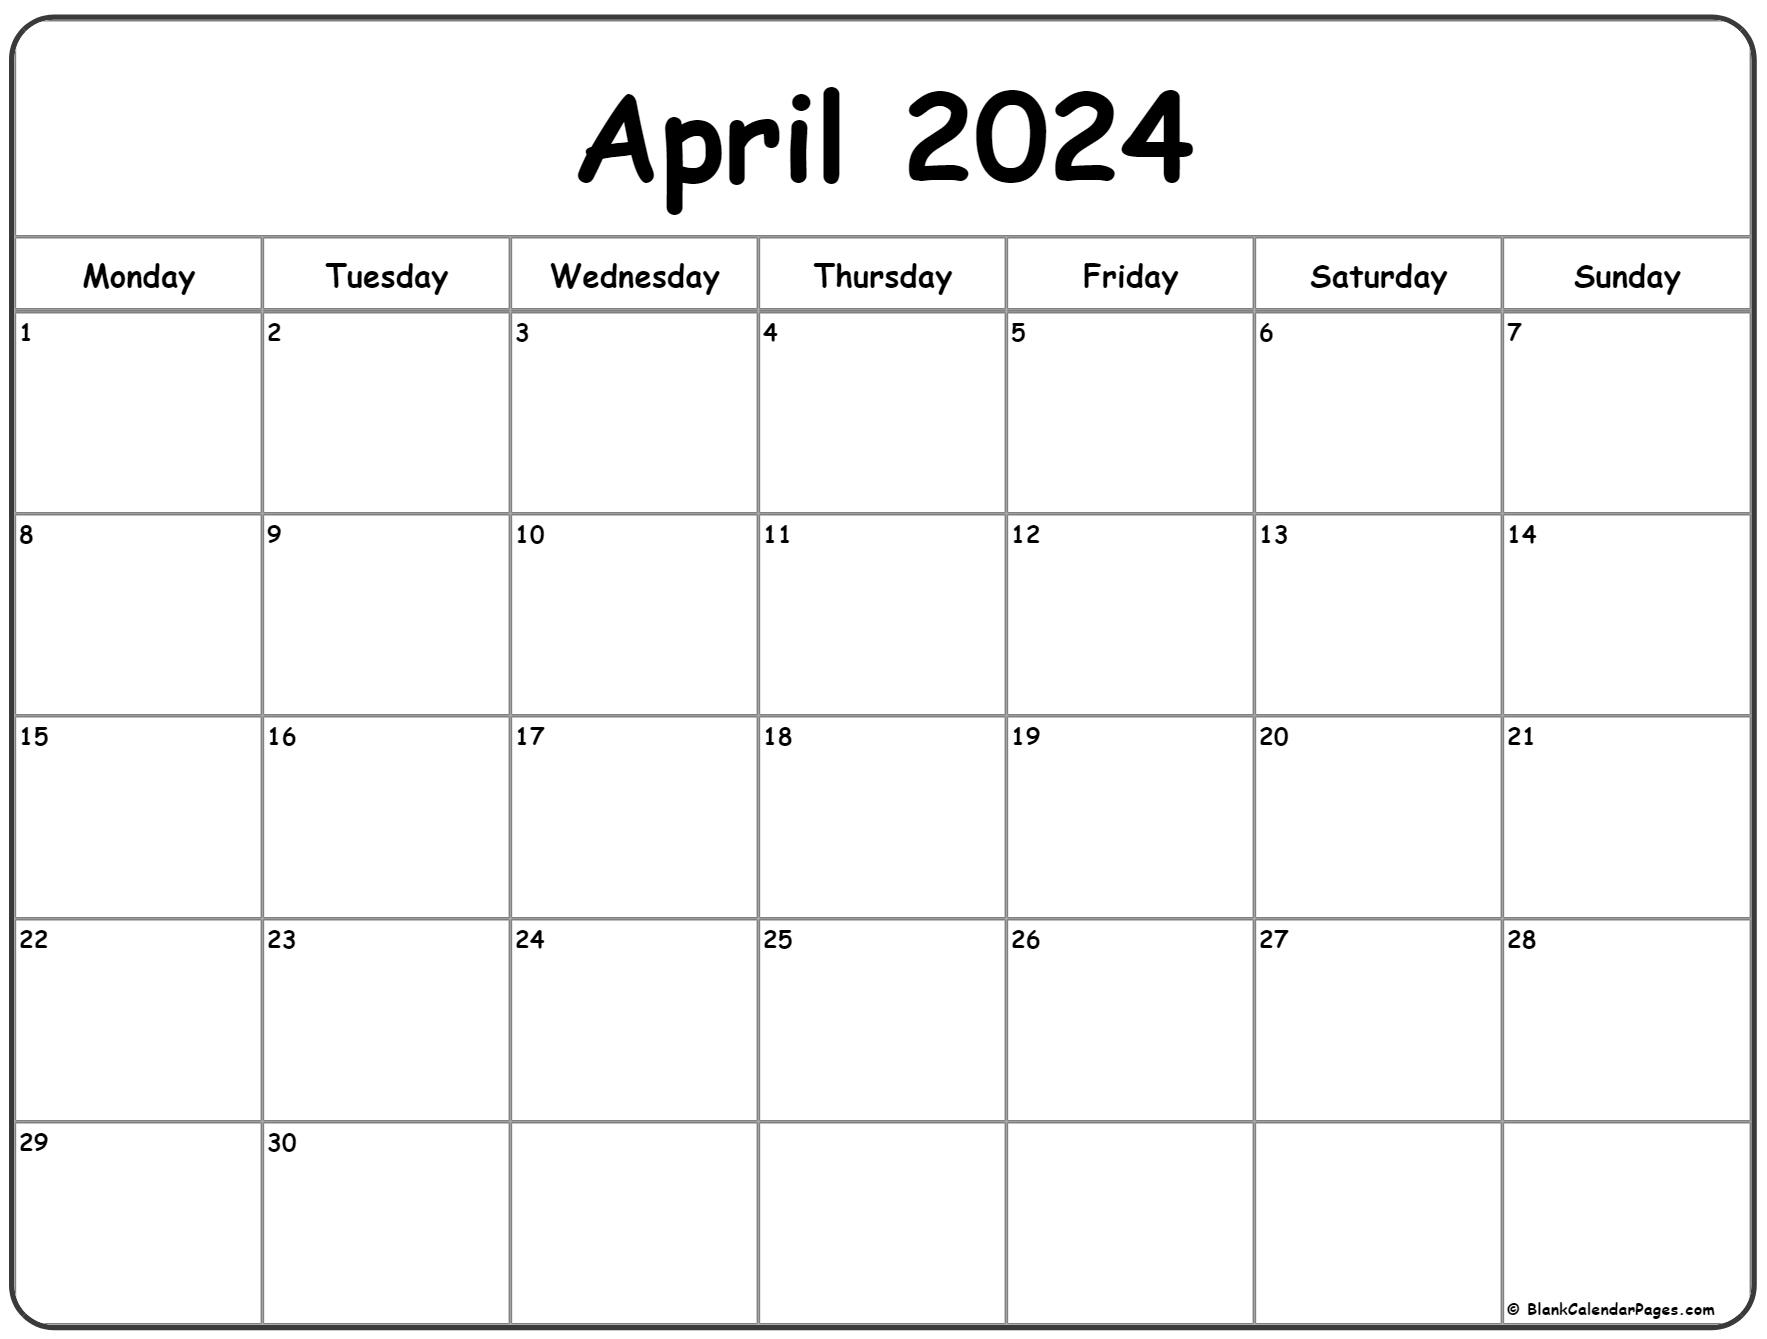 April 2024 Monday Calendar | Monday To Sunday for April 2024 Monthly Calendar Printable